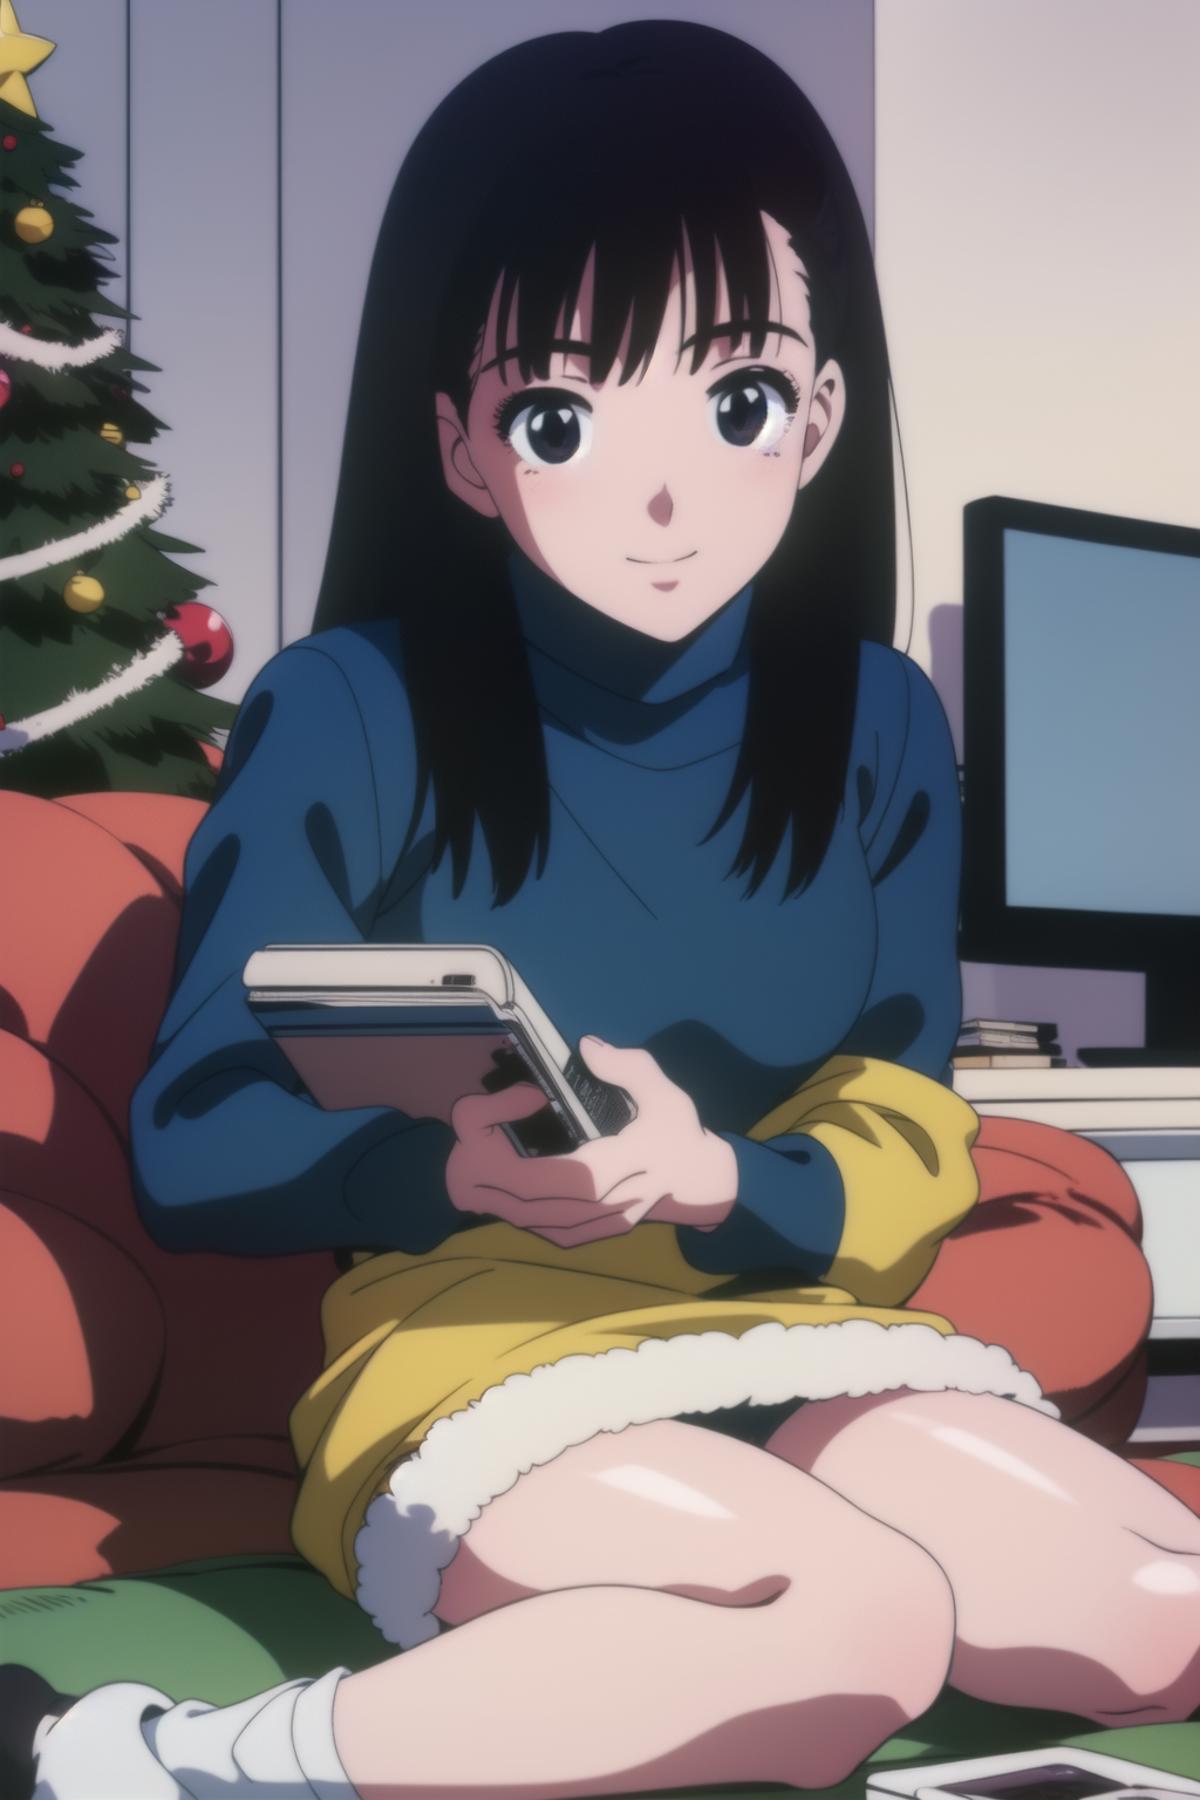 Haruko (Roujin Z) - Classic Anime Character image by yamato_freedom465